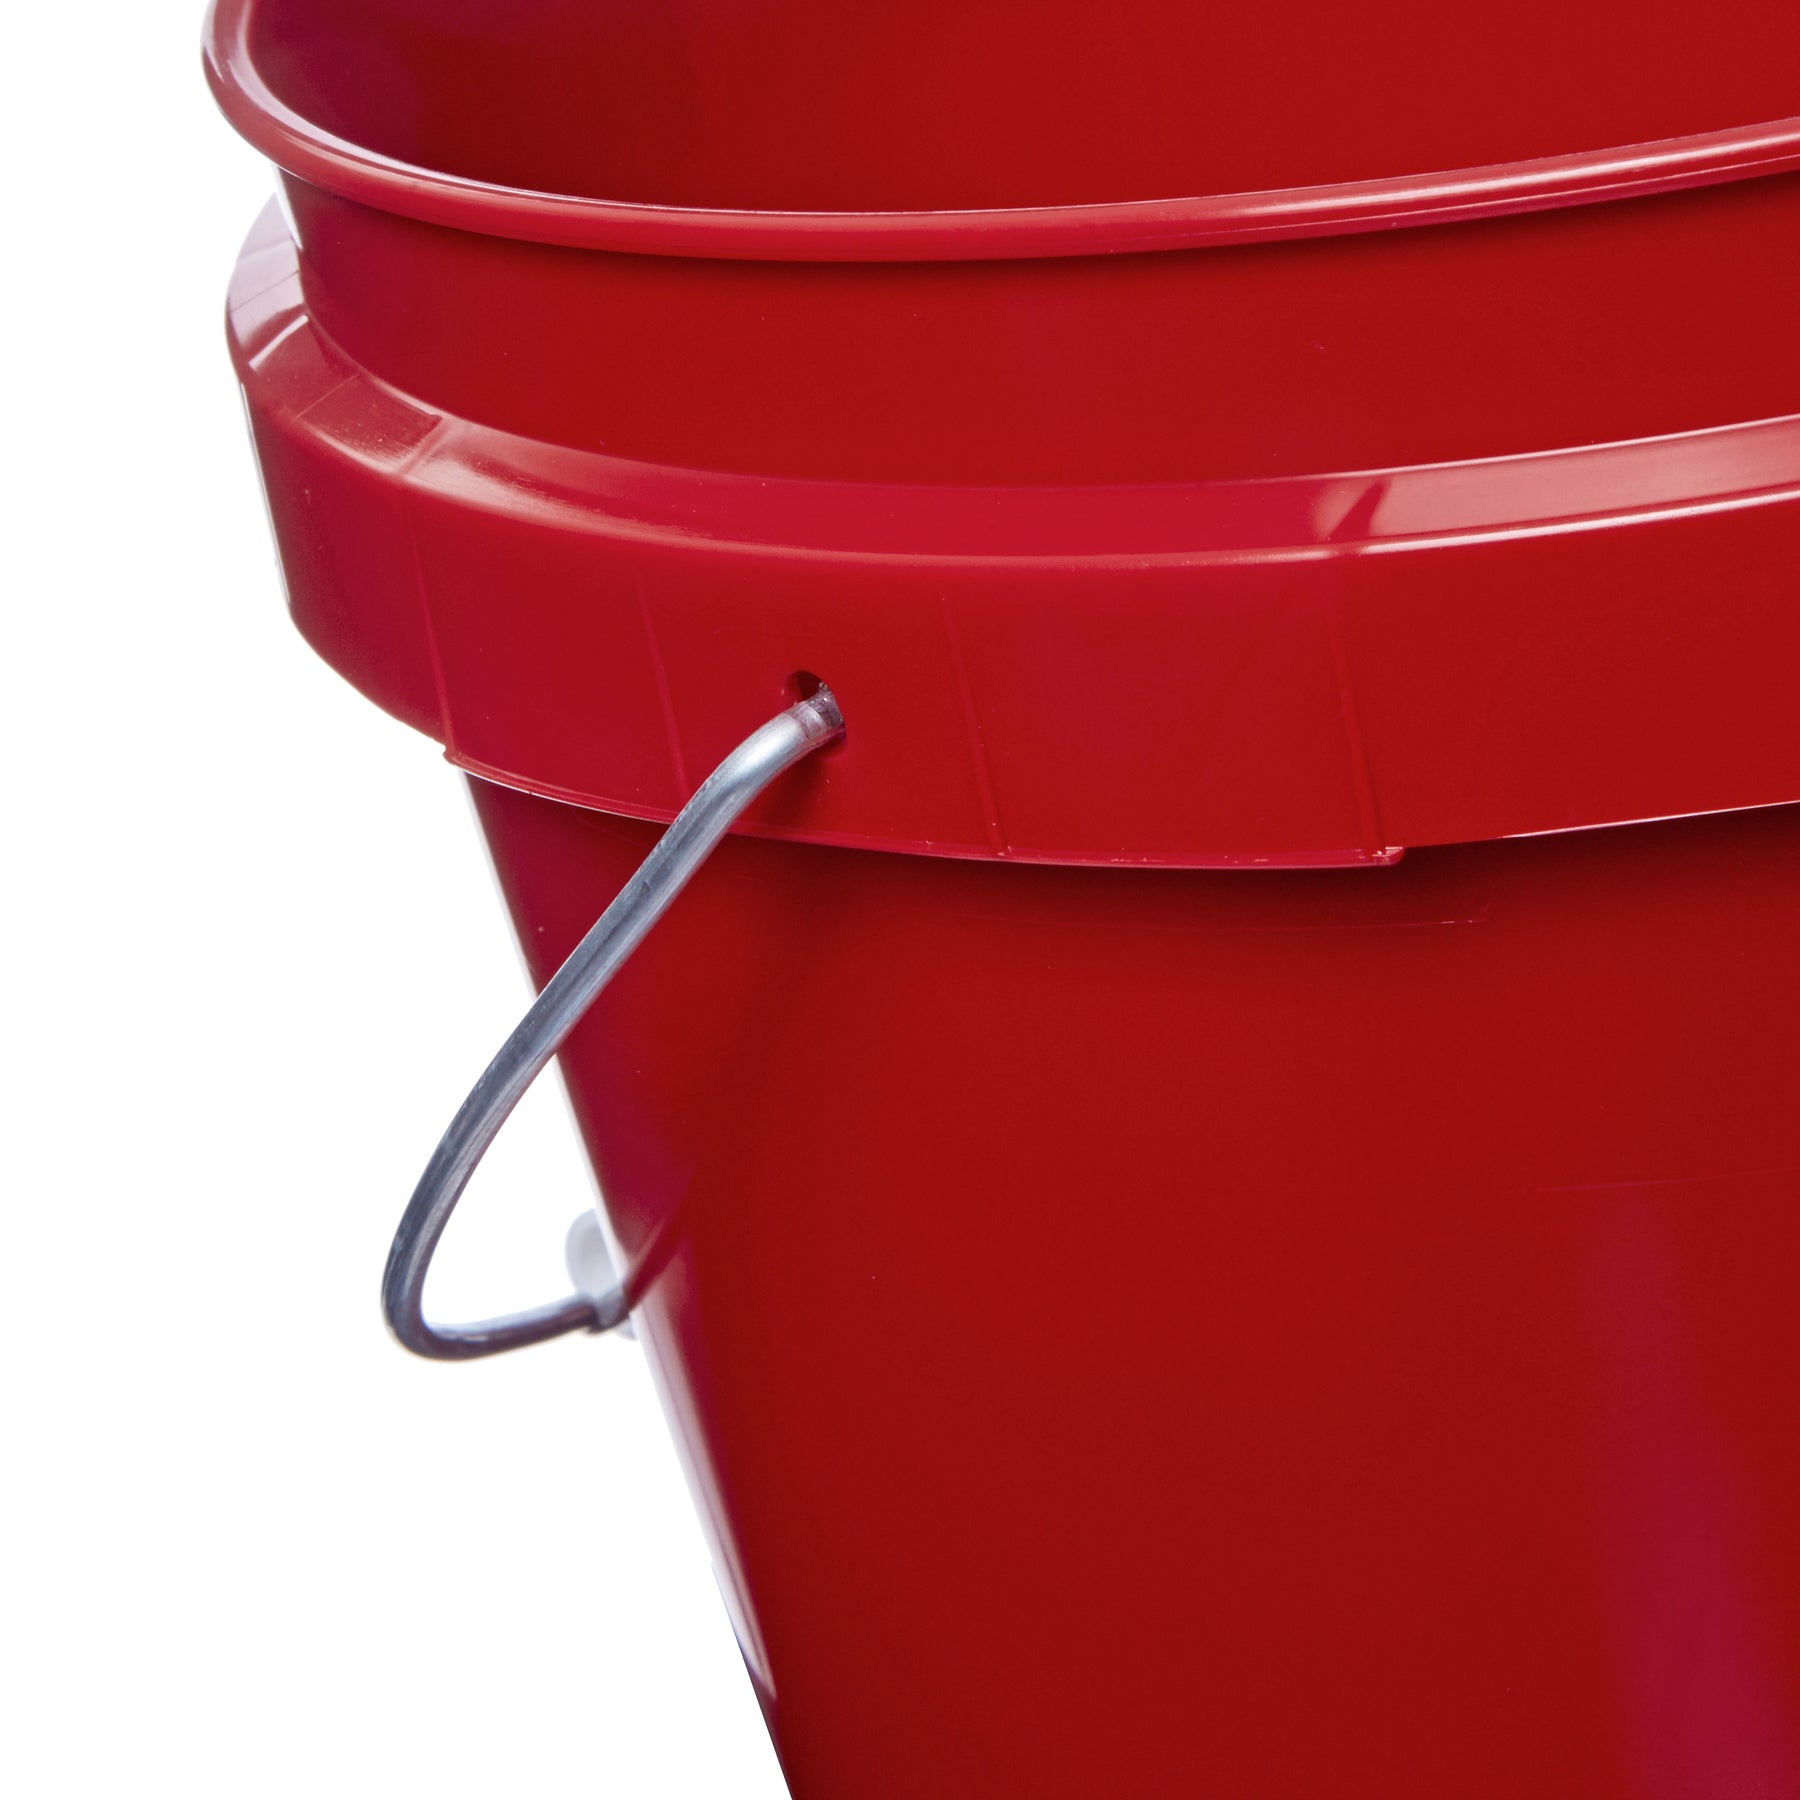 2 Gallon Bucket Lid - Solid